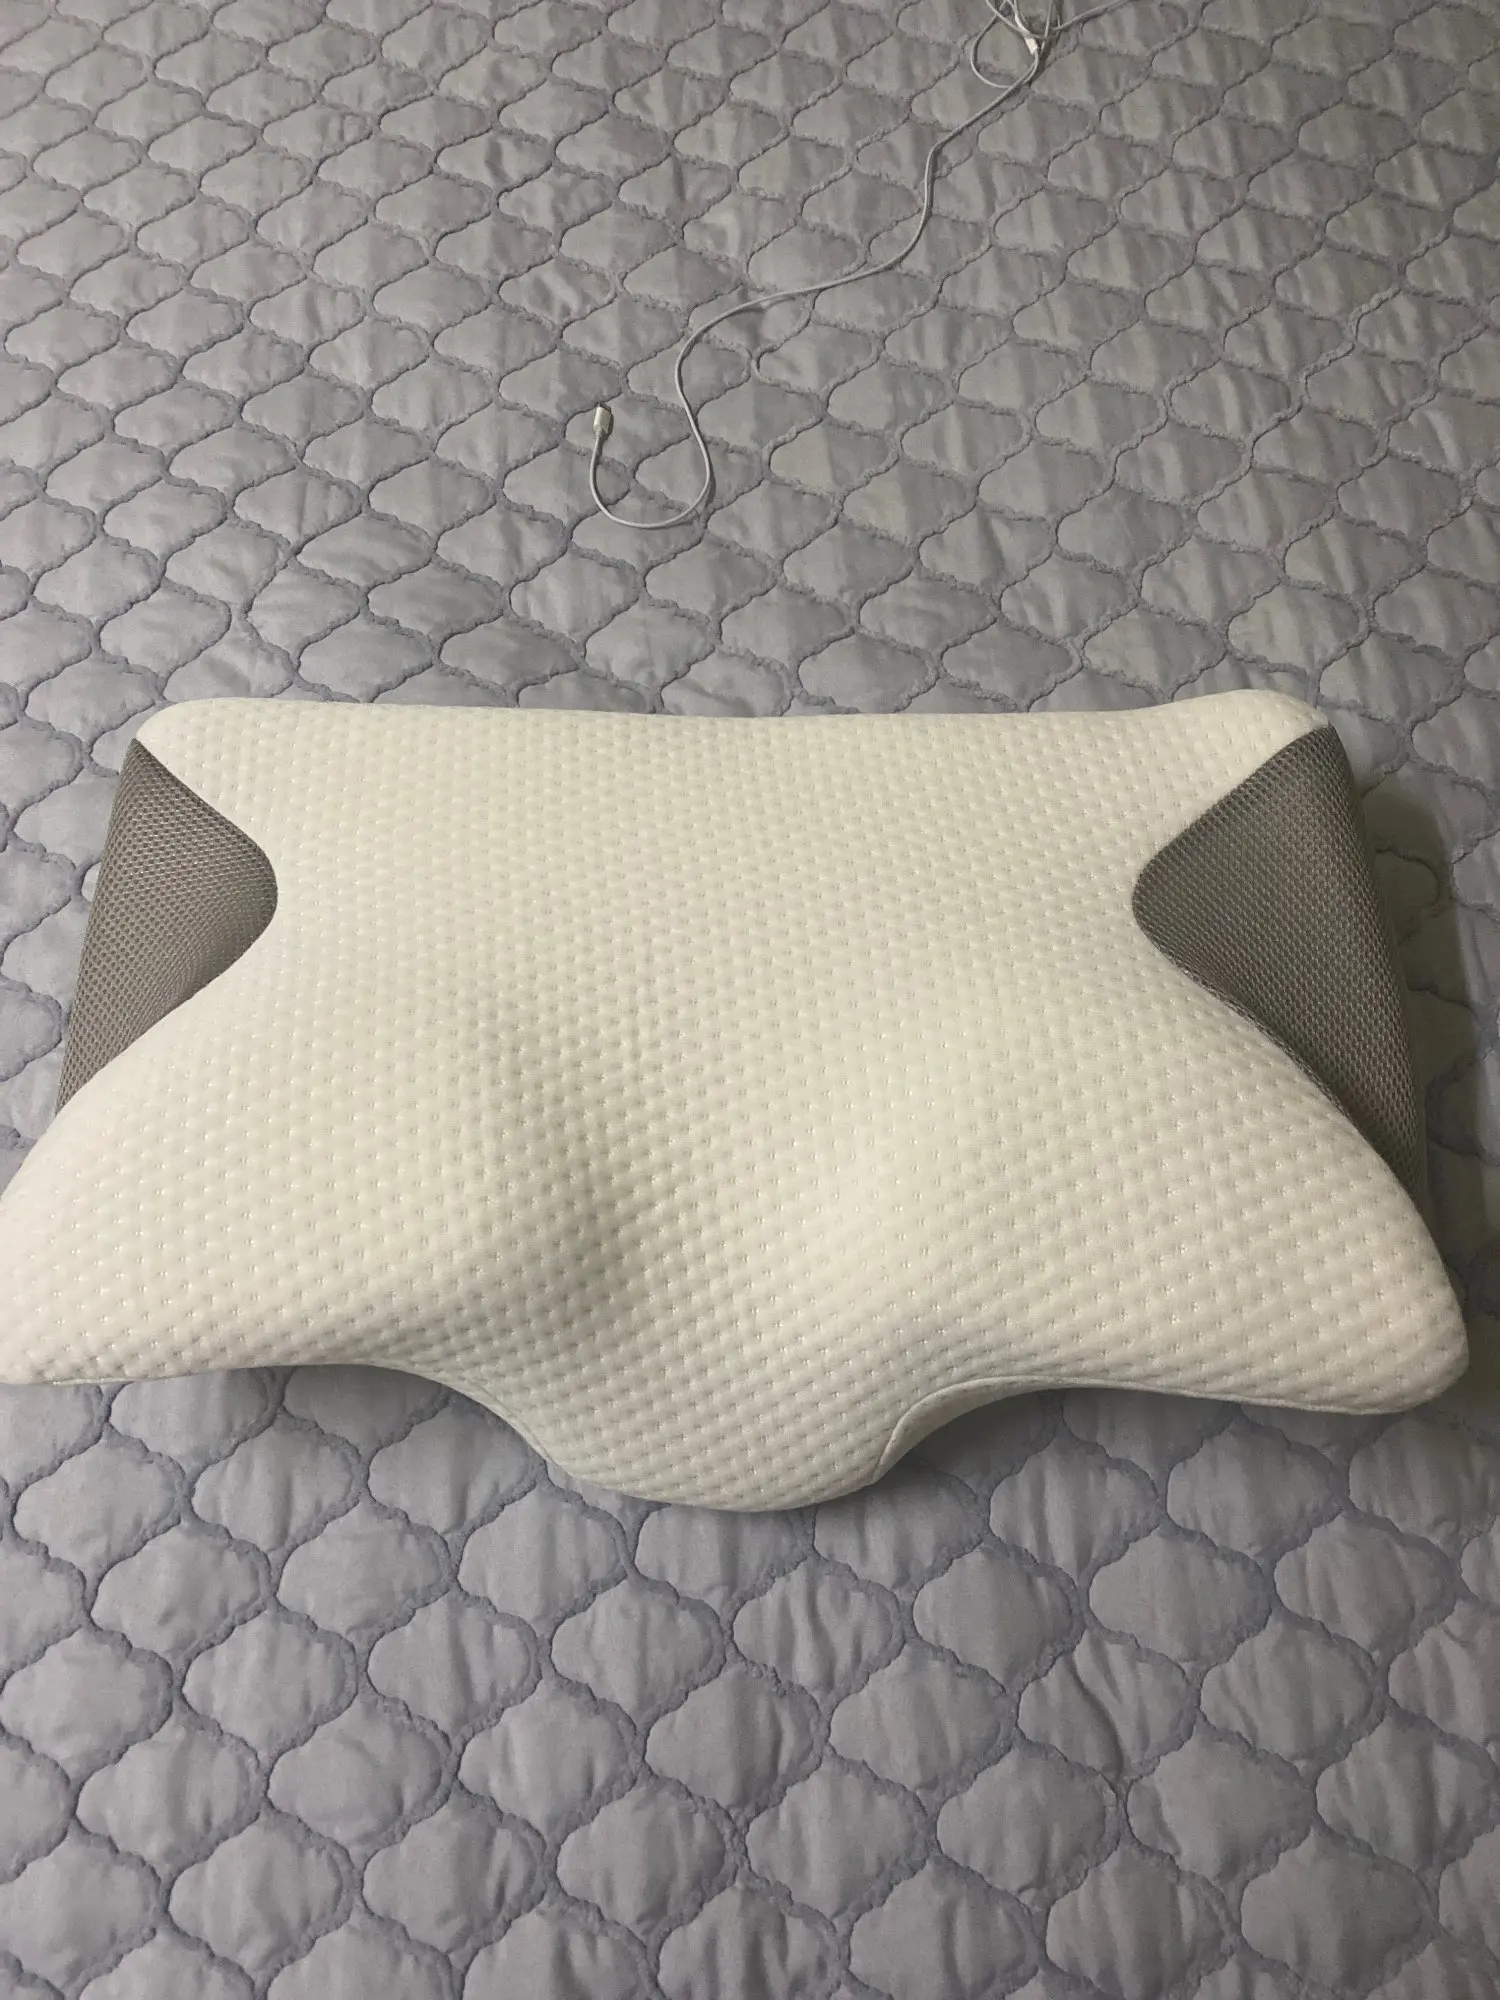 The Endorma Orthopedic Pillow